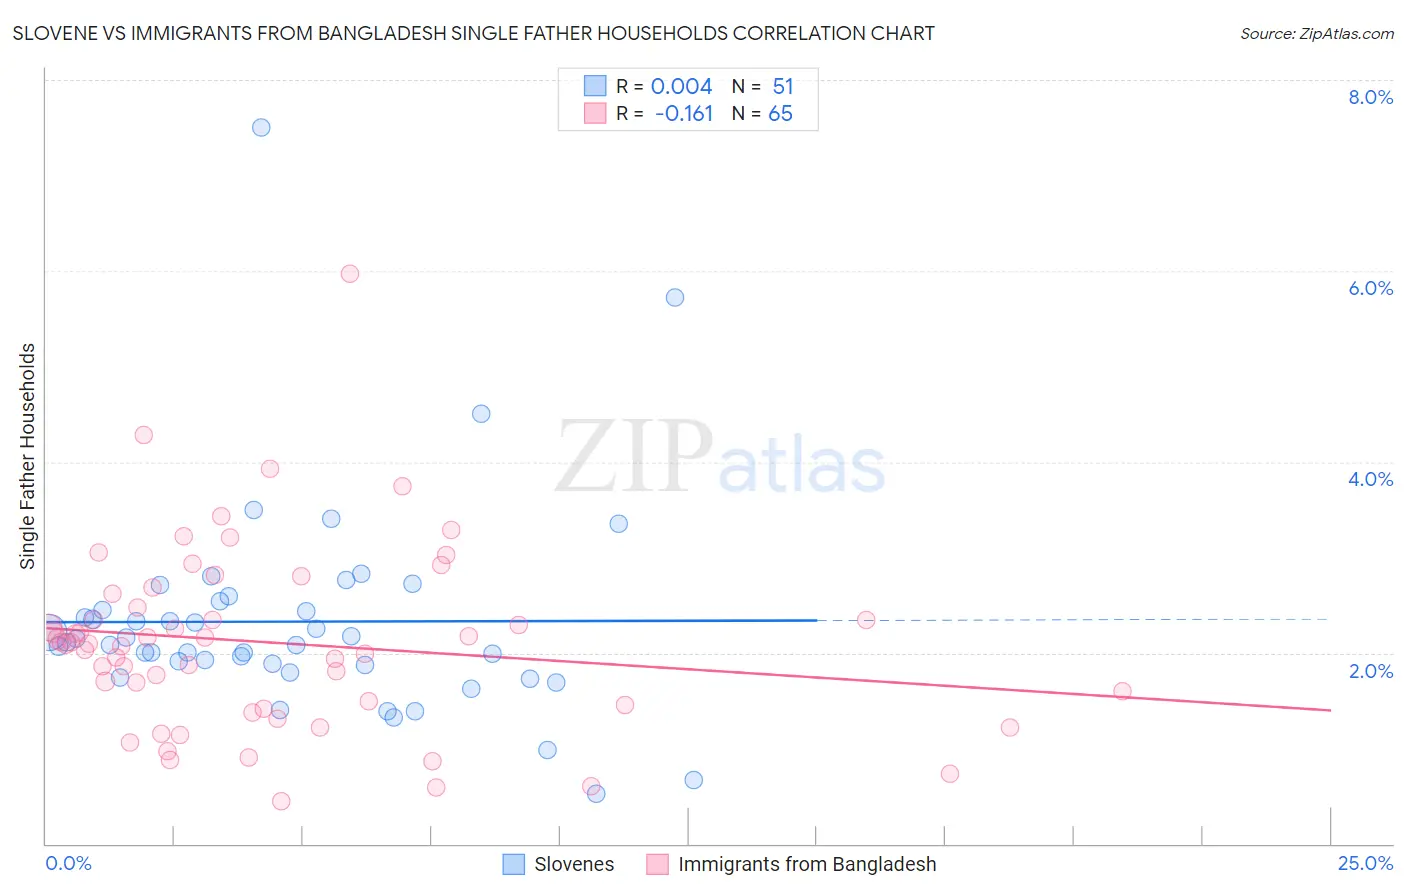 Slovene vs Immigrants from Bangladesh Single Father Households